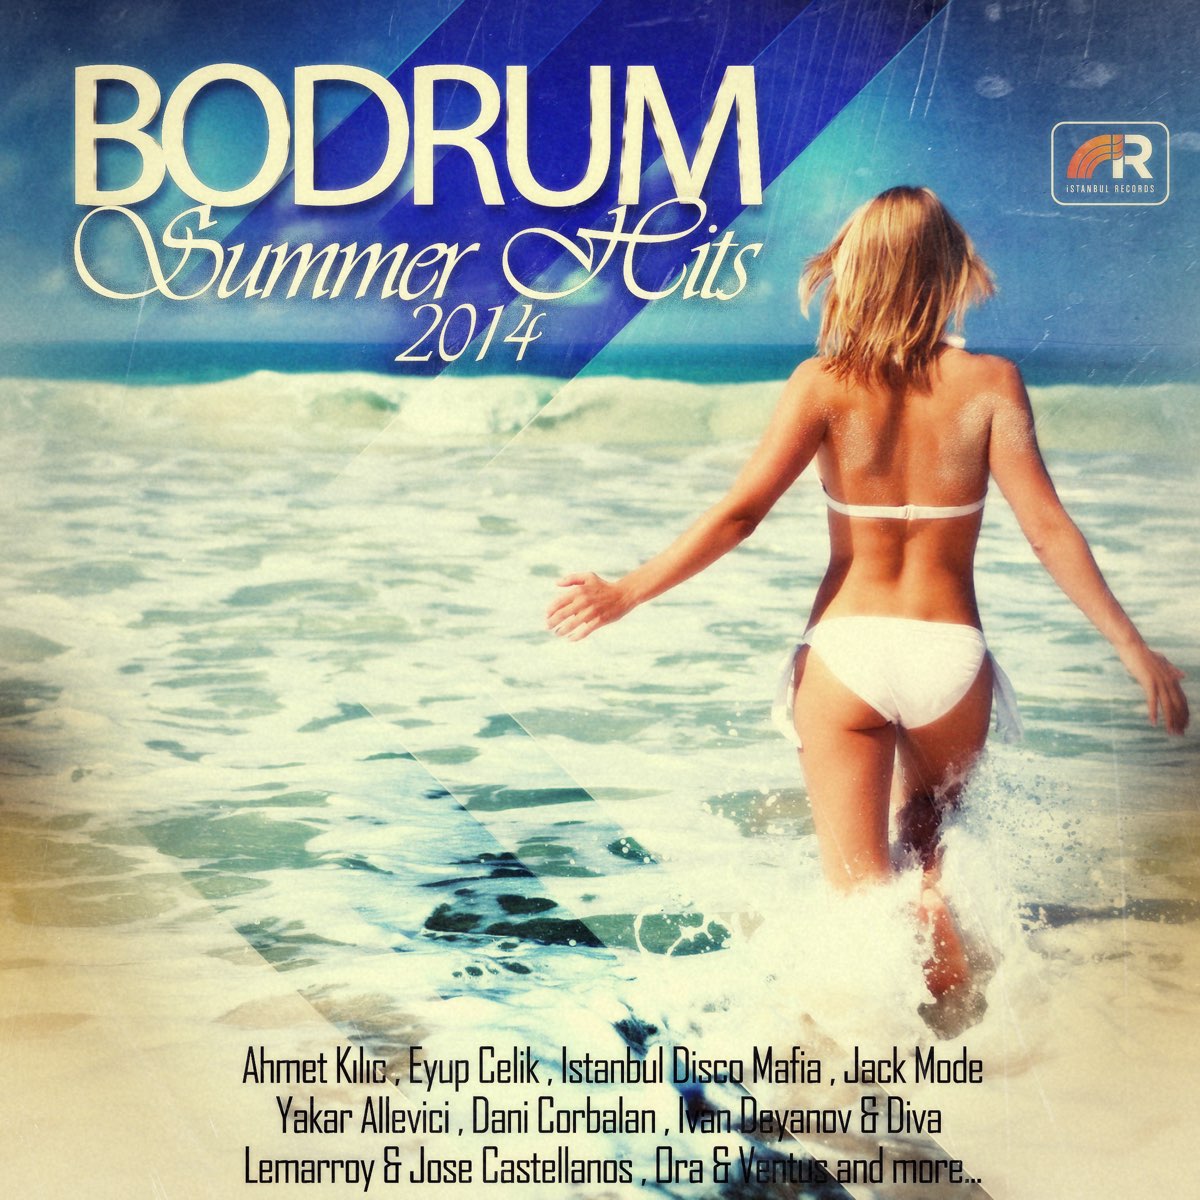 Музыка 280. Bodrum Summer. Dani Corbalan - in Deep. Summer Hit песня. Ahmet Kilic & Eyup Celik - Living on my own.